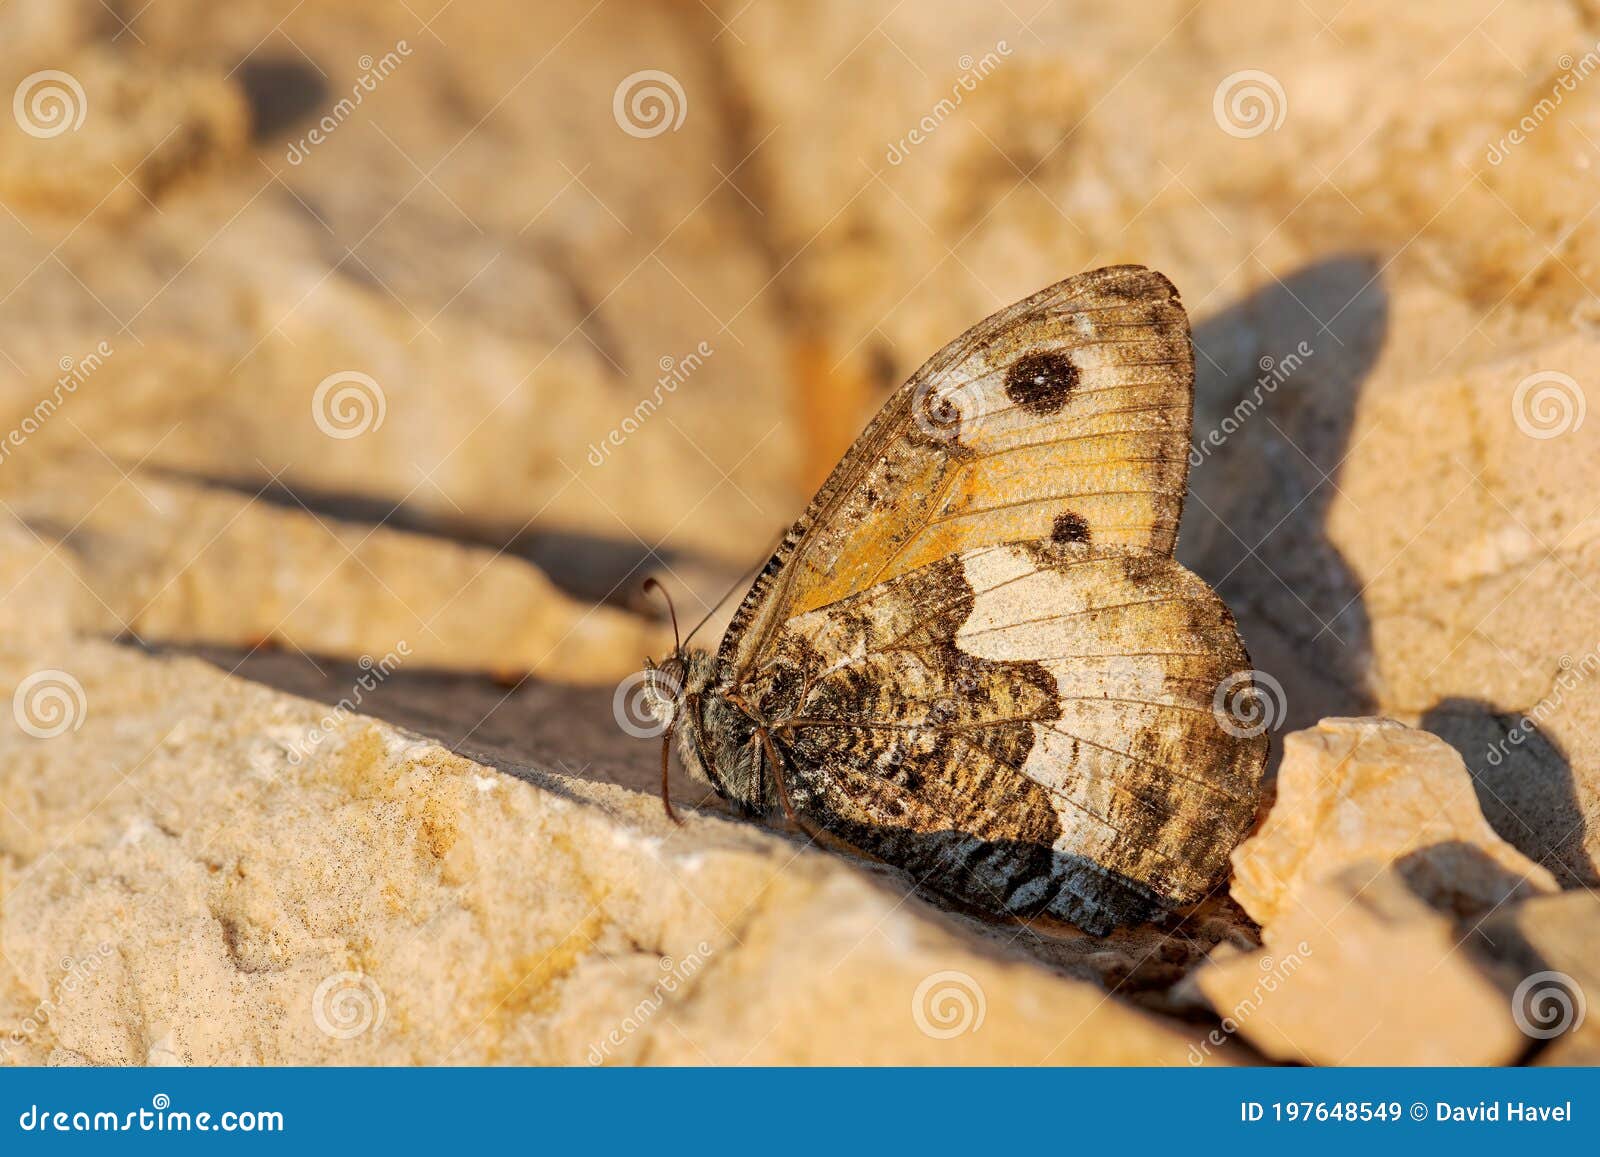 grayling butterfly - hipparchia semele